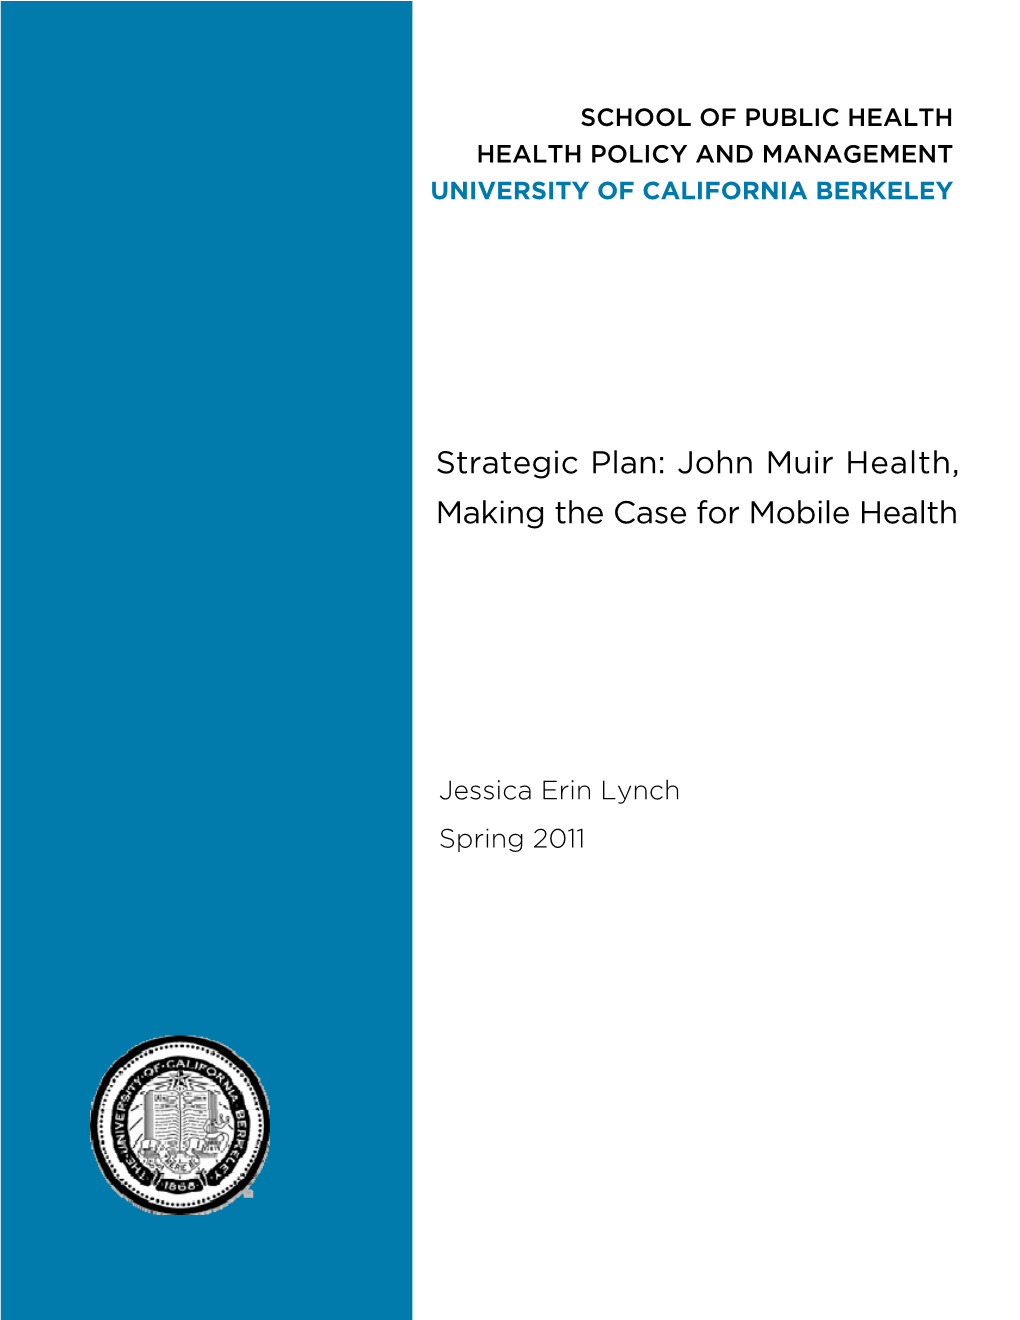 Strategic Plan: John Muir Health, Making the Case for Mobile Health